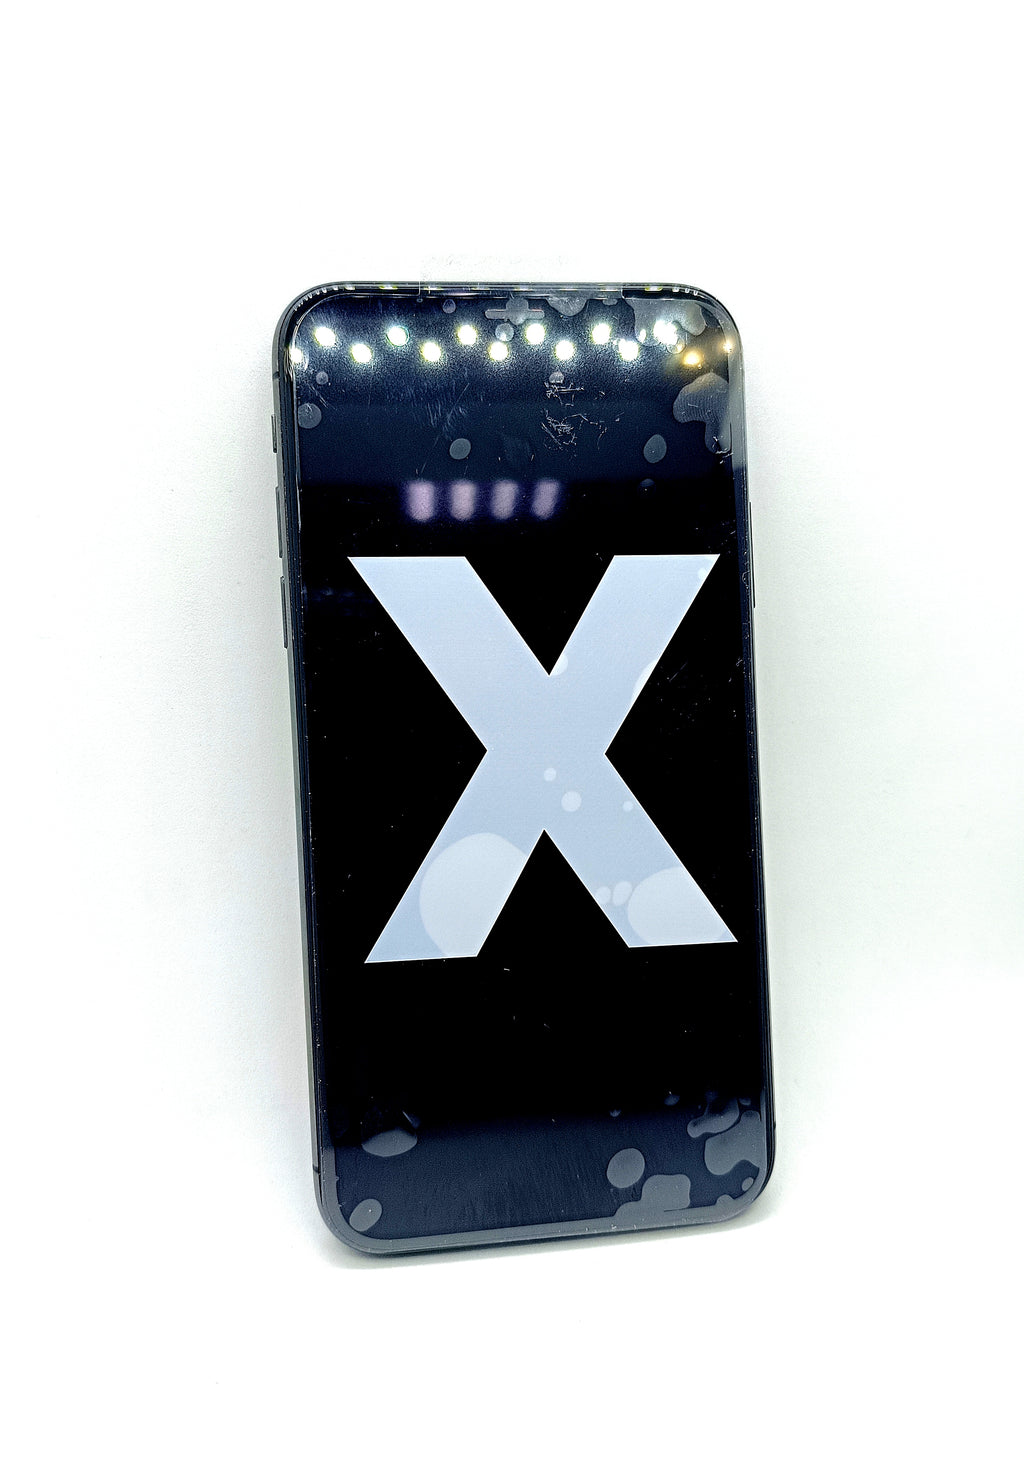 Bateria iPhone X – Celovendo. Repuestos para celulares en Guatemala.